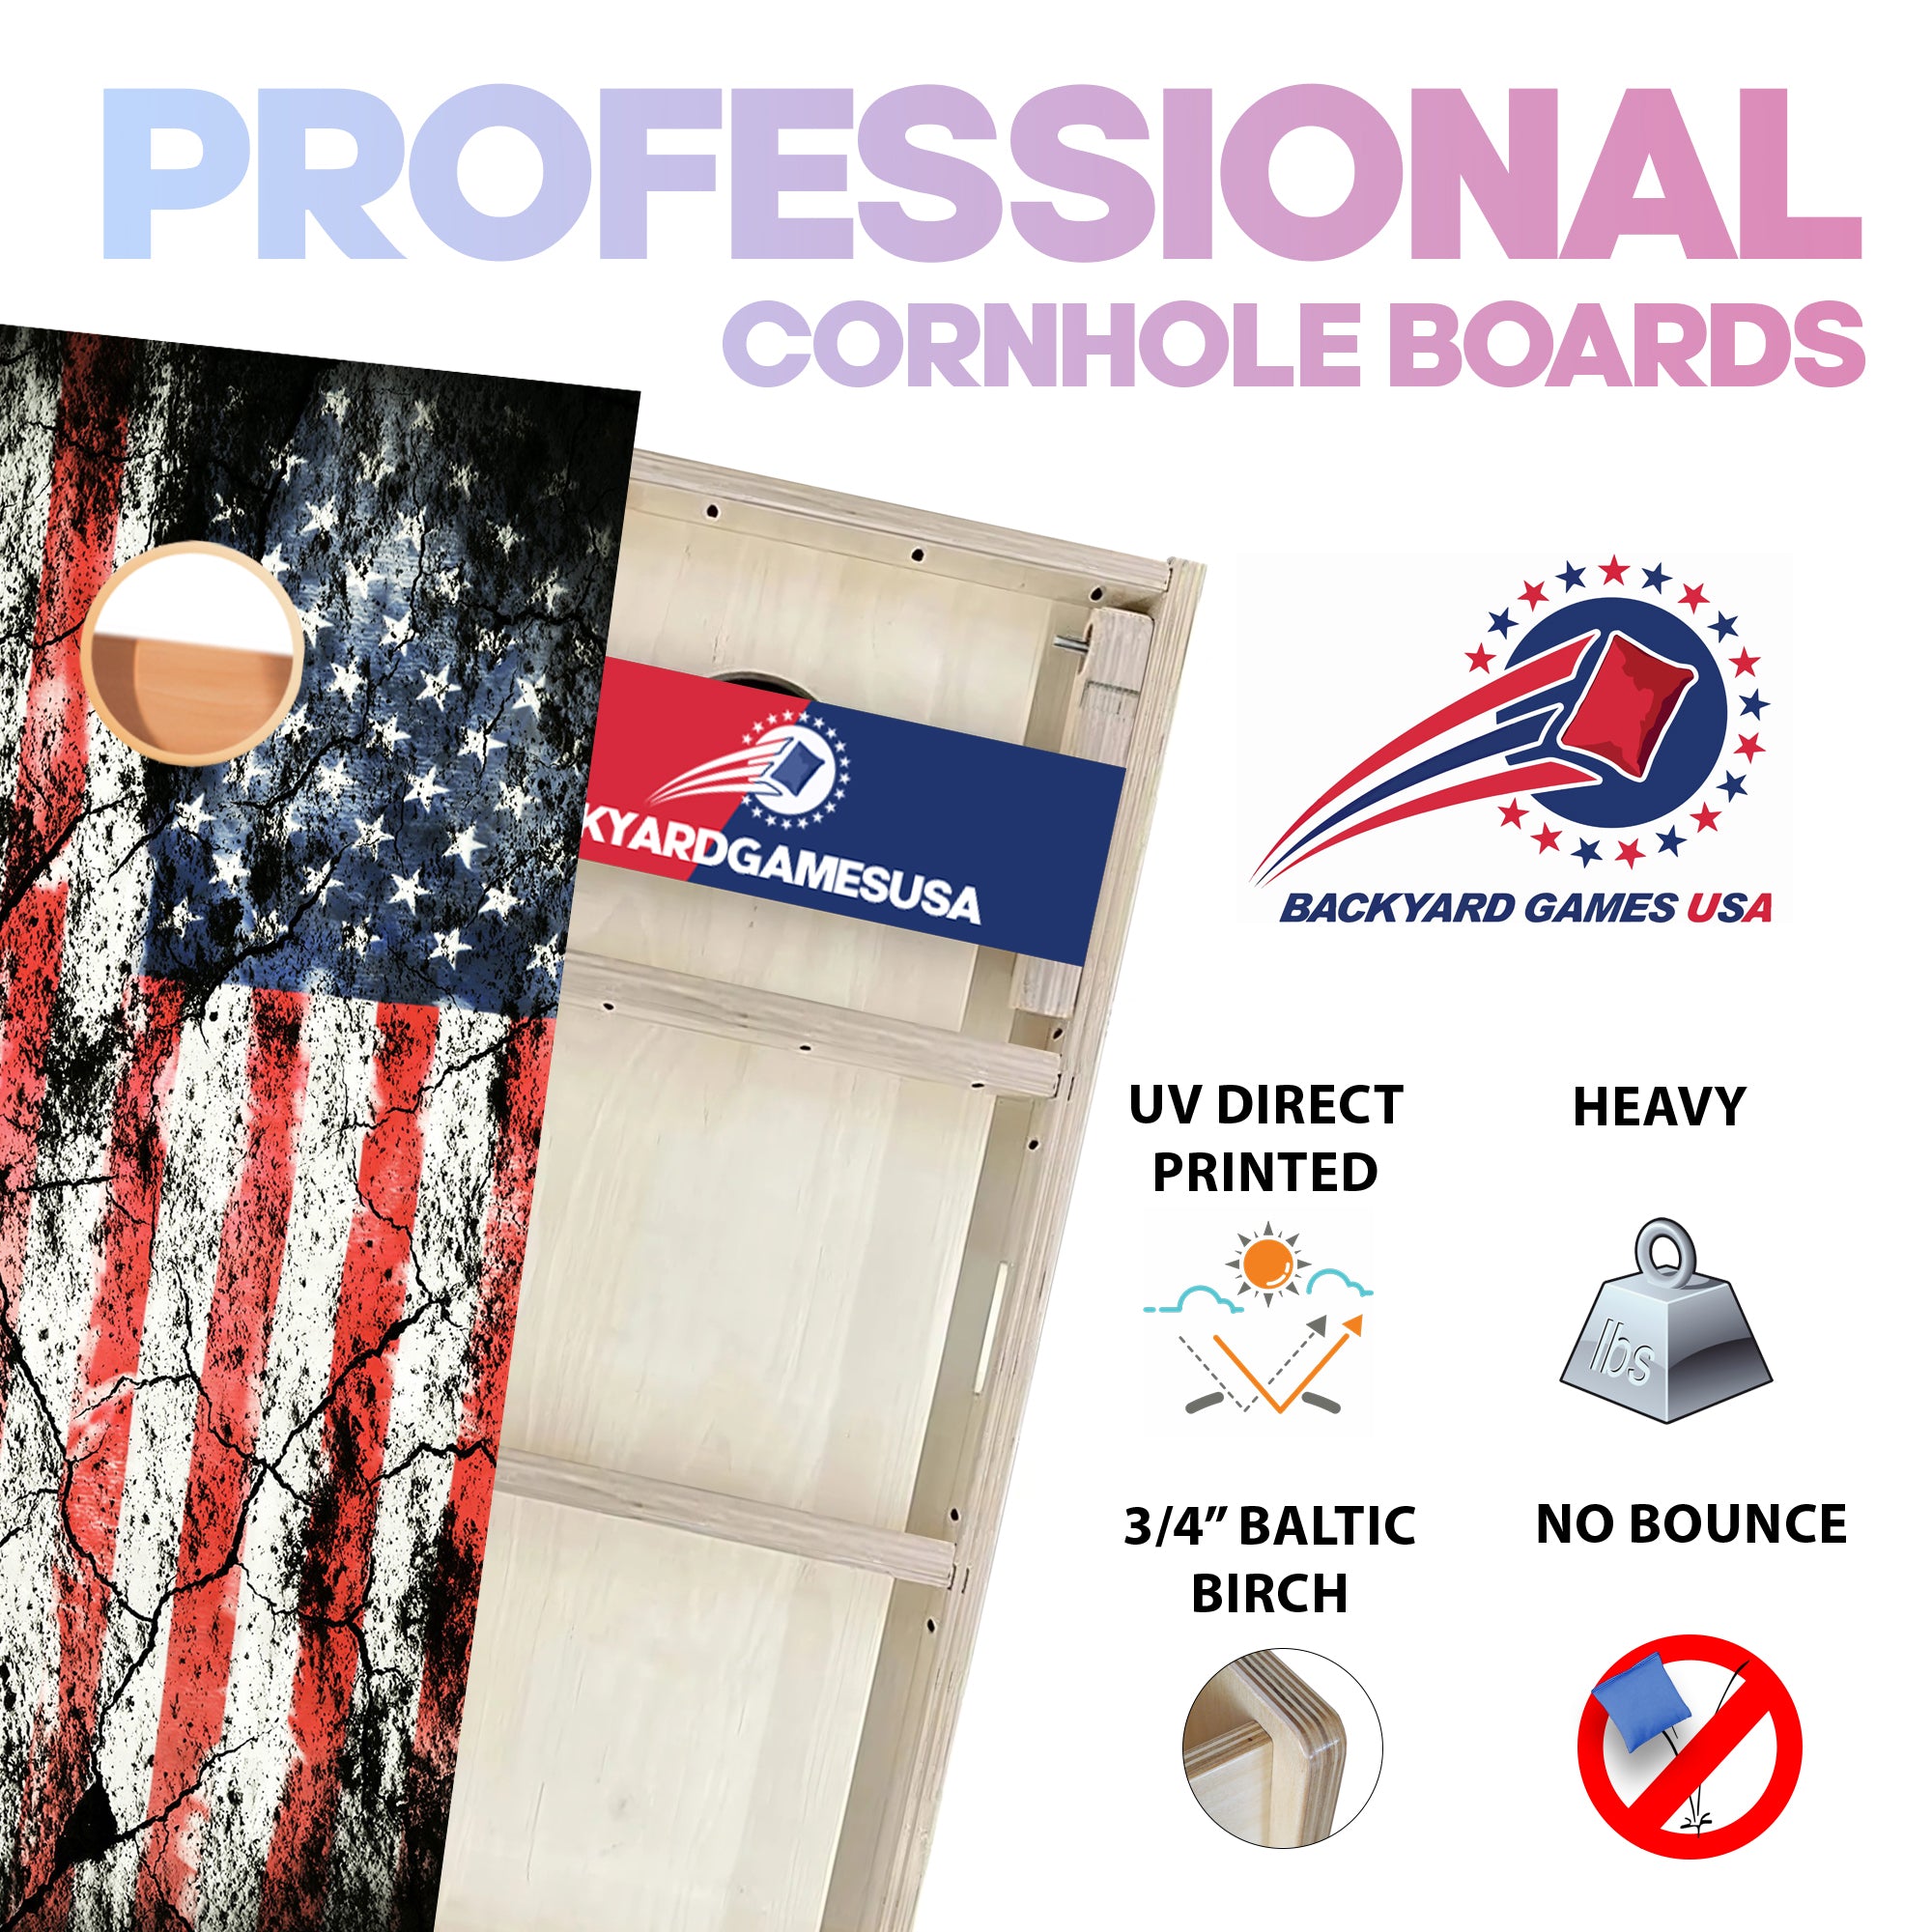 Cracked Flag Professional Cornhole Boards